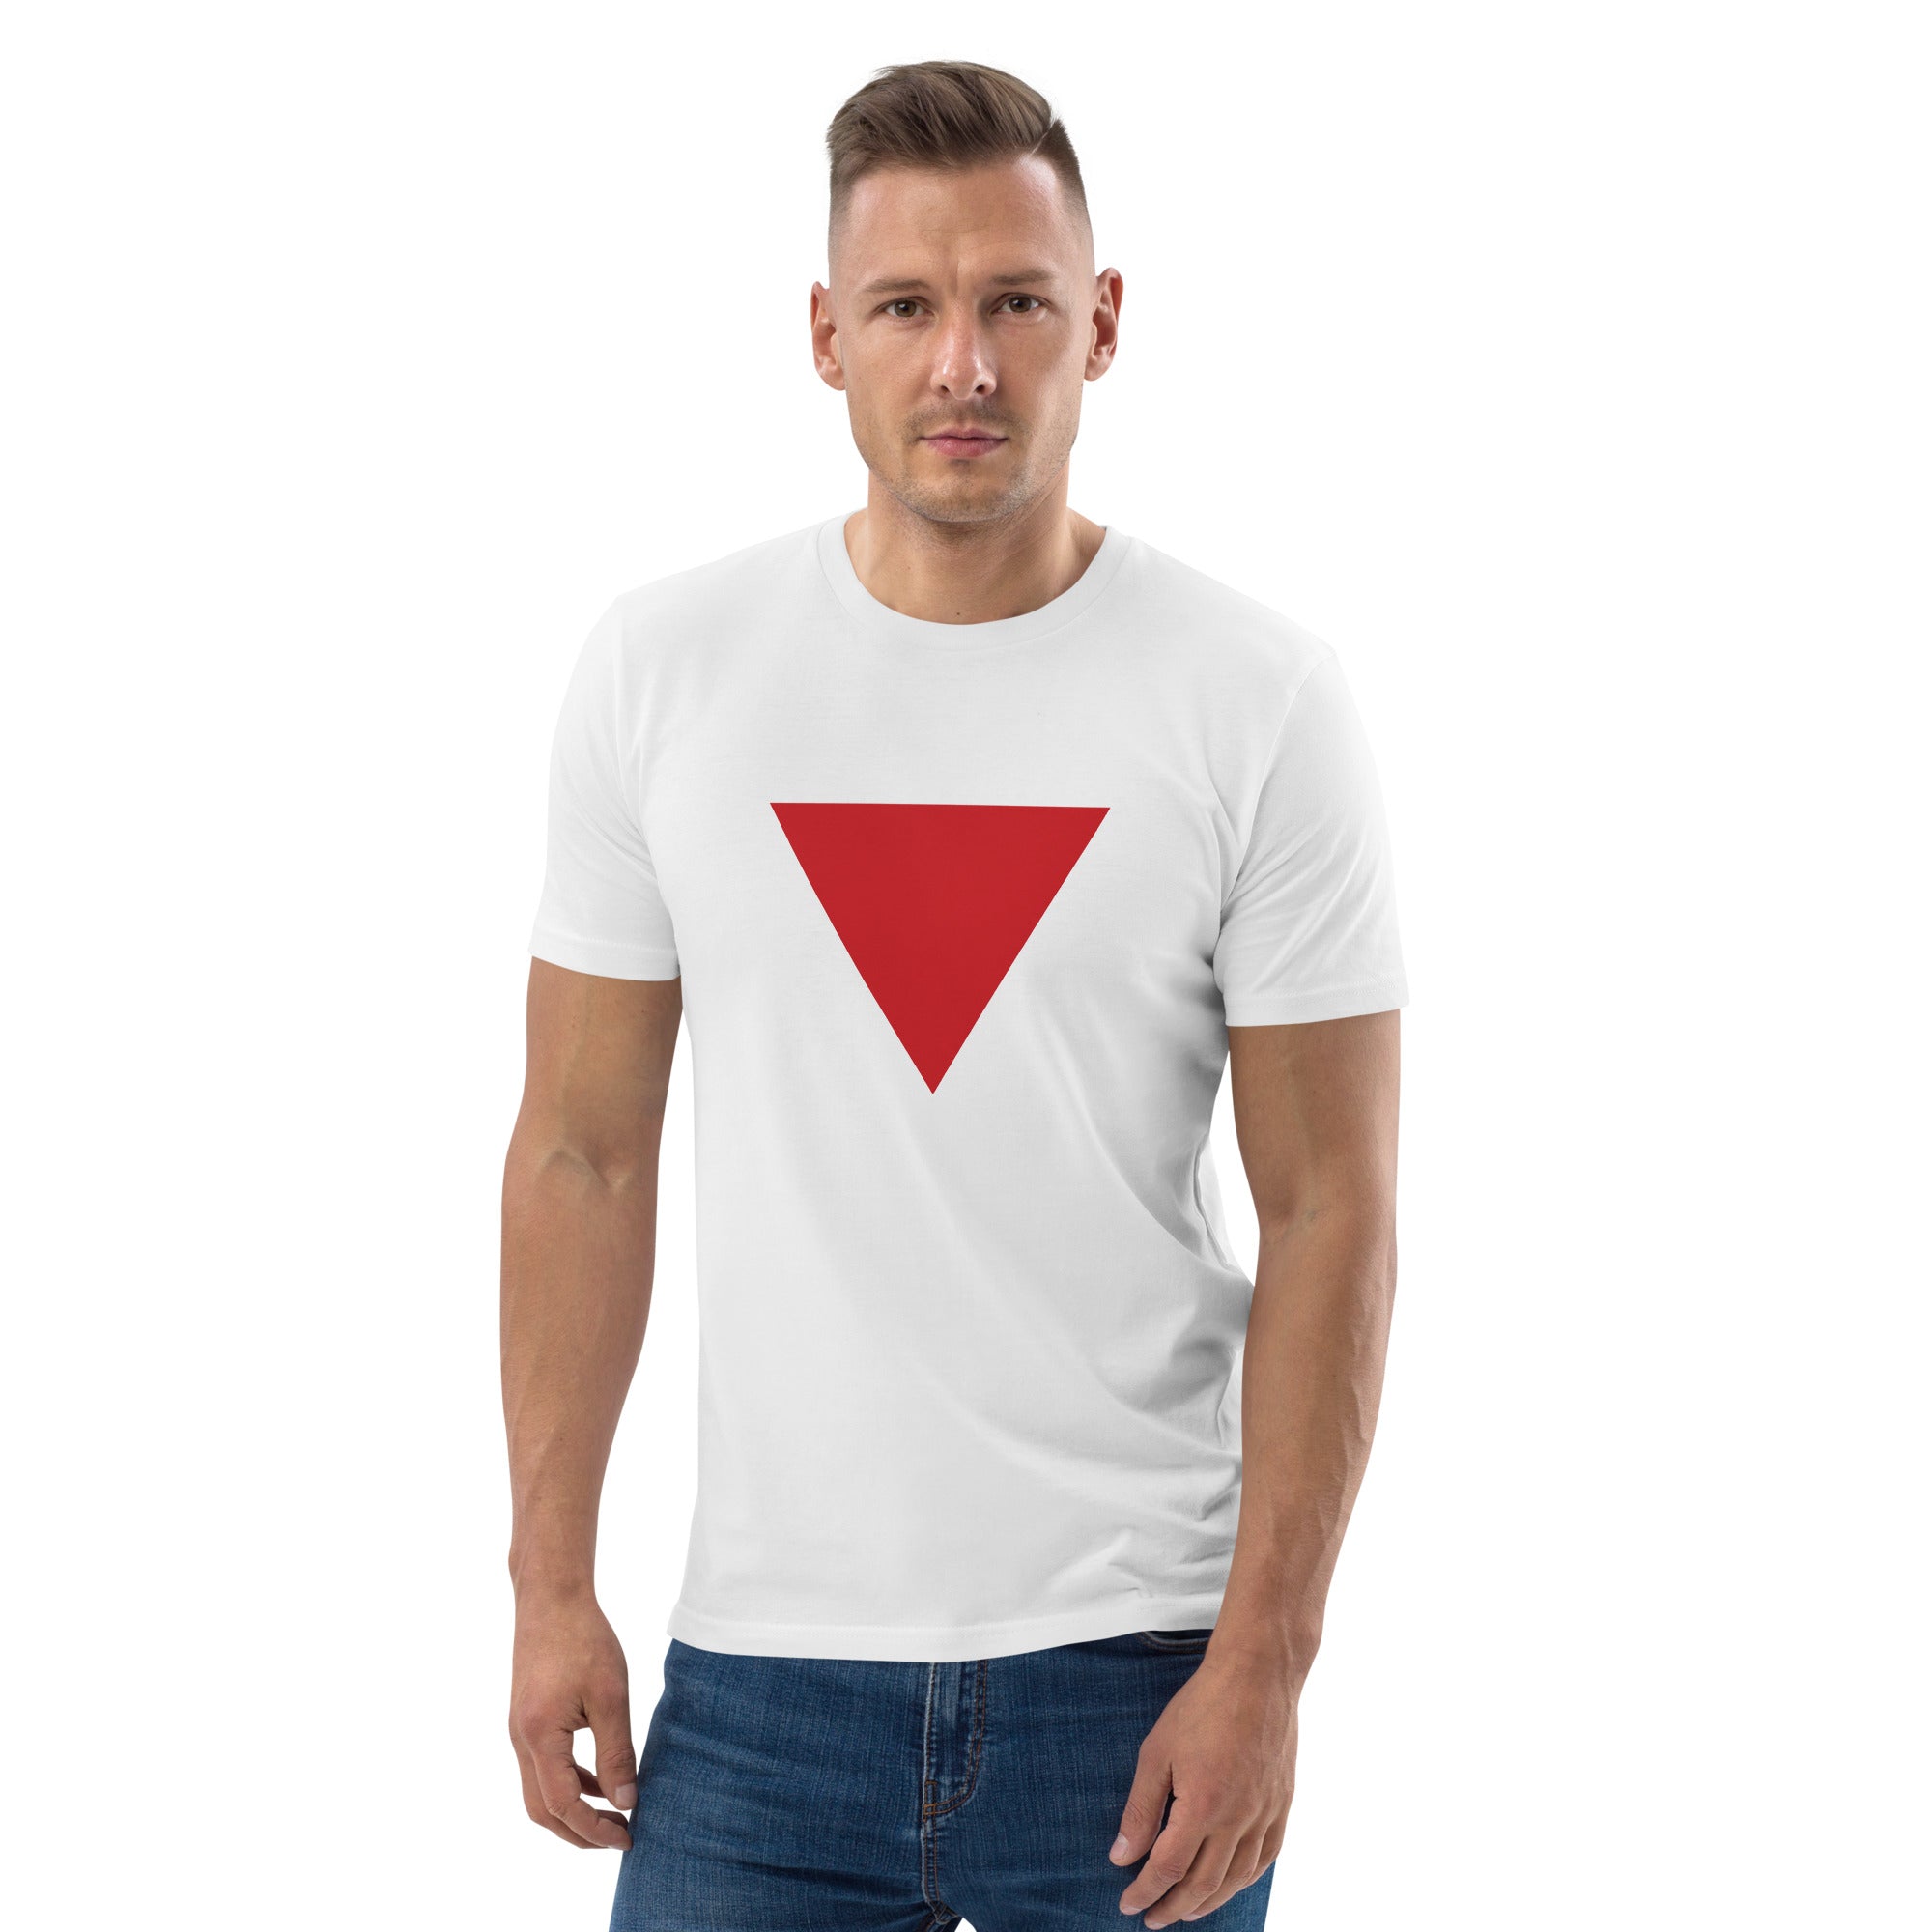 red triangle emoji - t-shirt